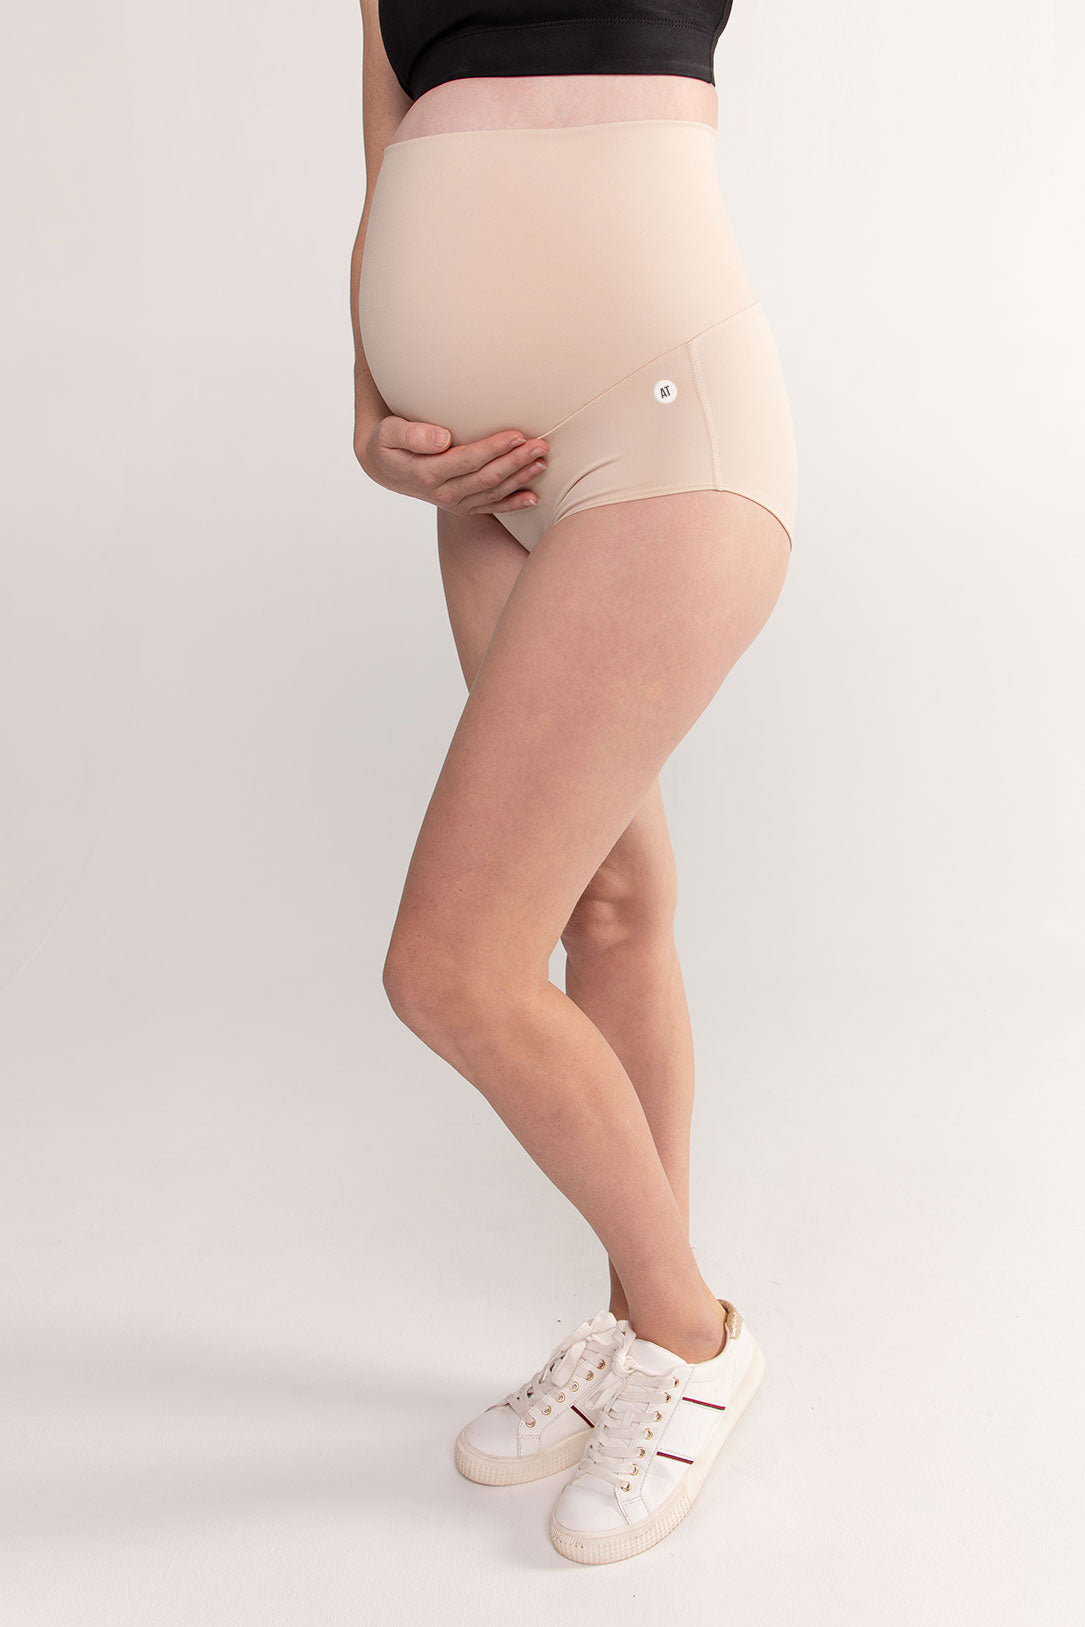 Soft Cotton Maternity Panty - Baby Planet